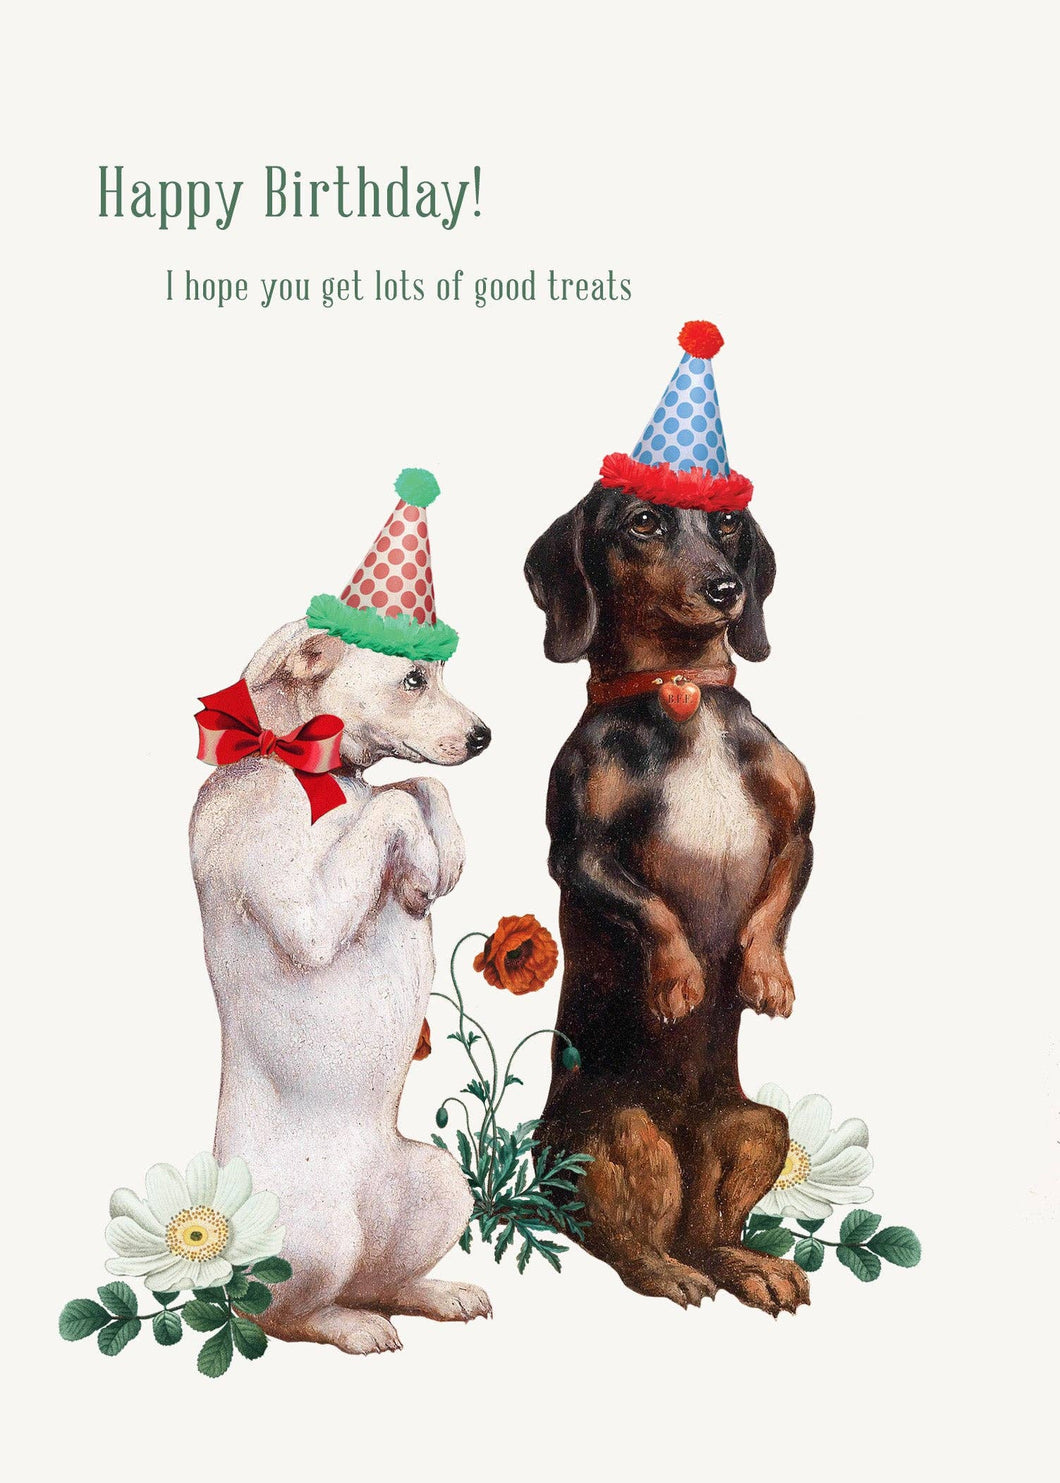 P. Flynn Design / Phun House - Happy Birthday you deserve lots of treats 5x7 greeting card